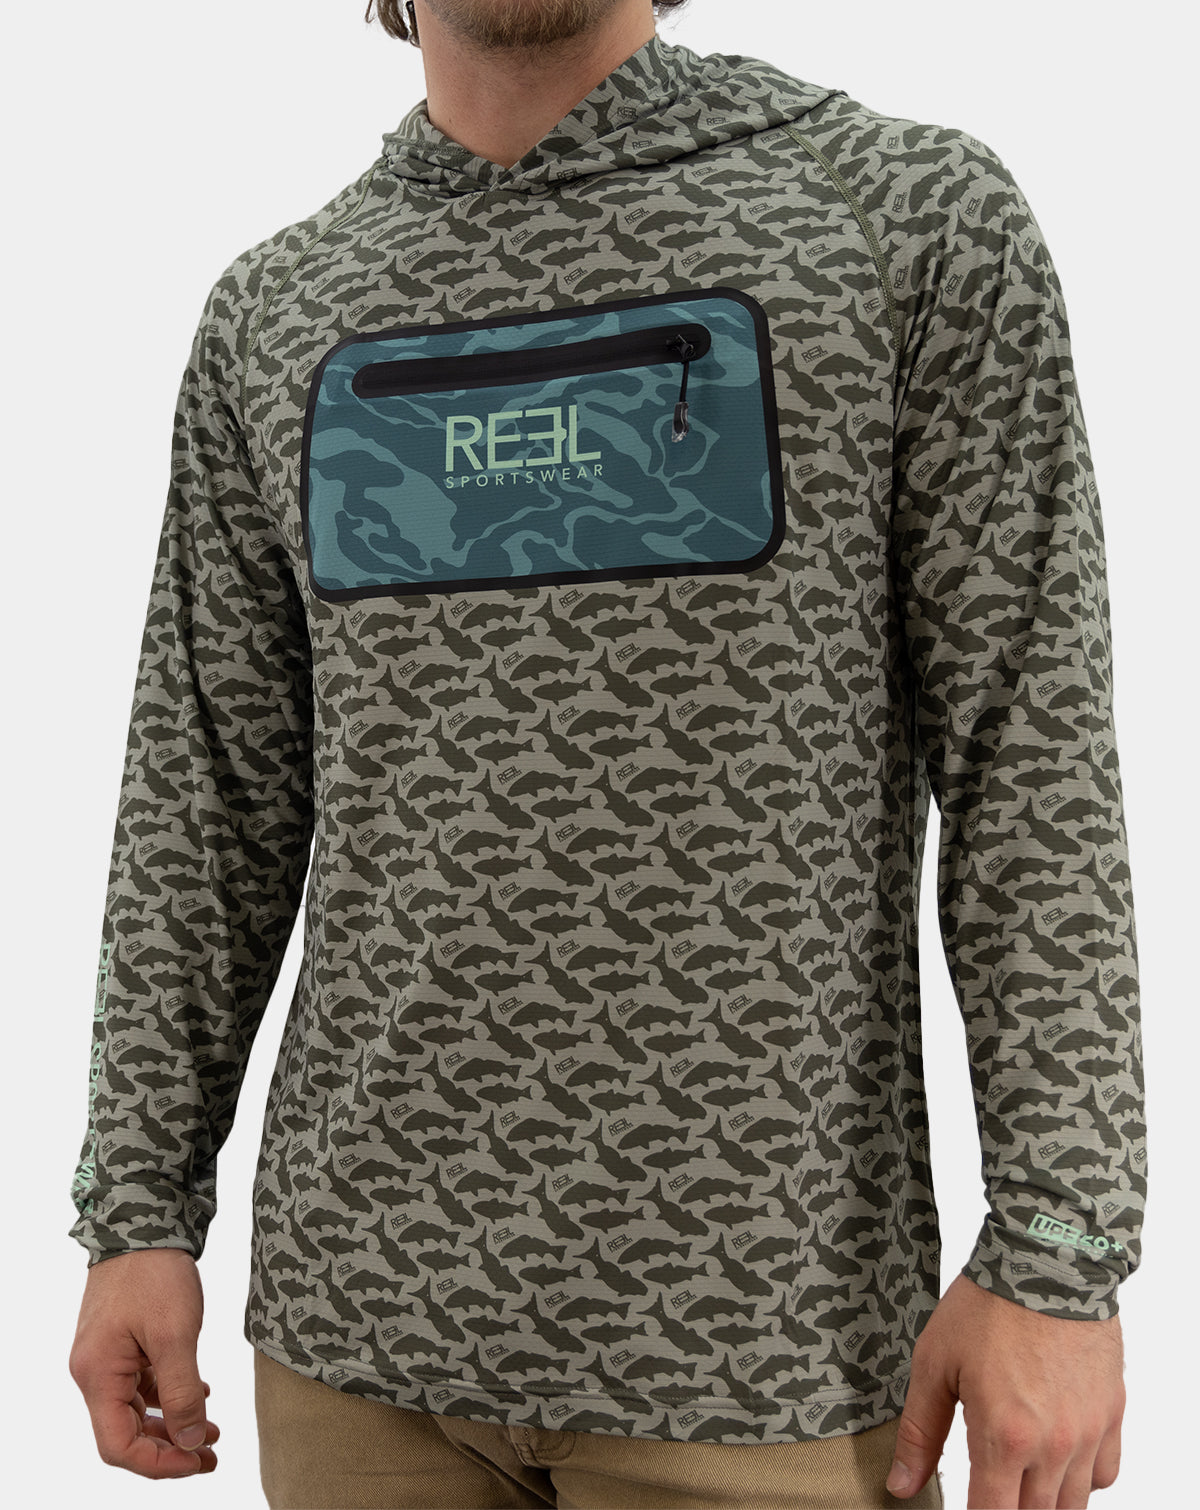 REEF & REEL Fishing Shirts Long Sleeve Uv Protection T Shirt for